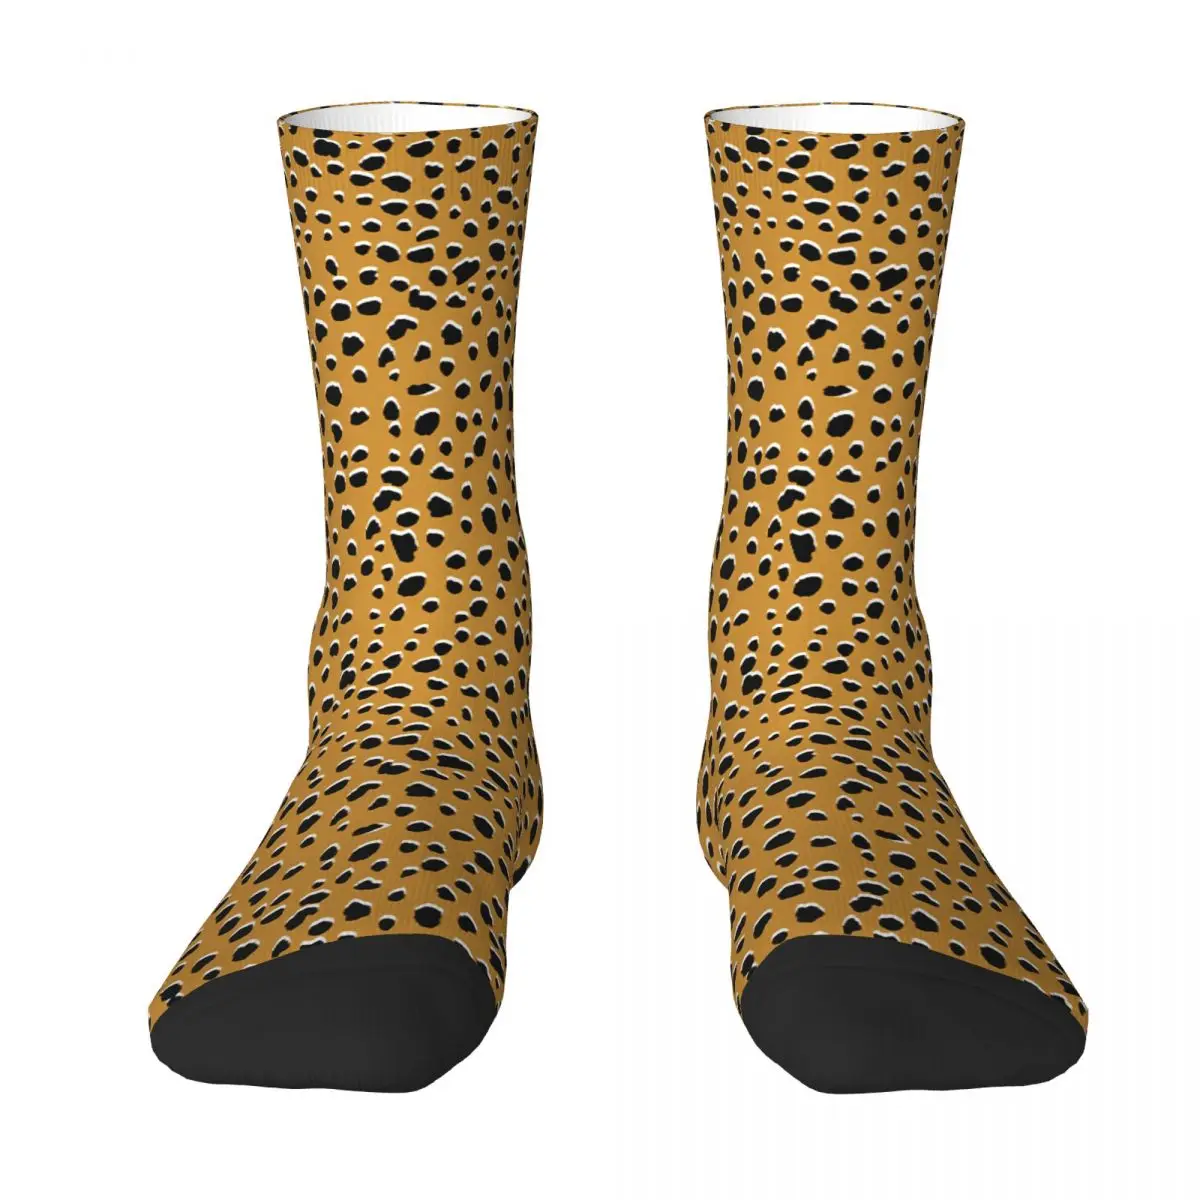 autumn retro style cotton breathable mid tube socks for women leopard pattern korean style fashion 1pair long socks adult sock Seamless Leopard Cheetah Skin Pattern Adult Socks,Unisex socks,men Socks women Socks